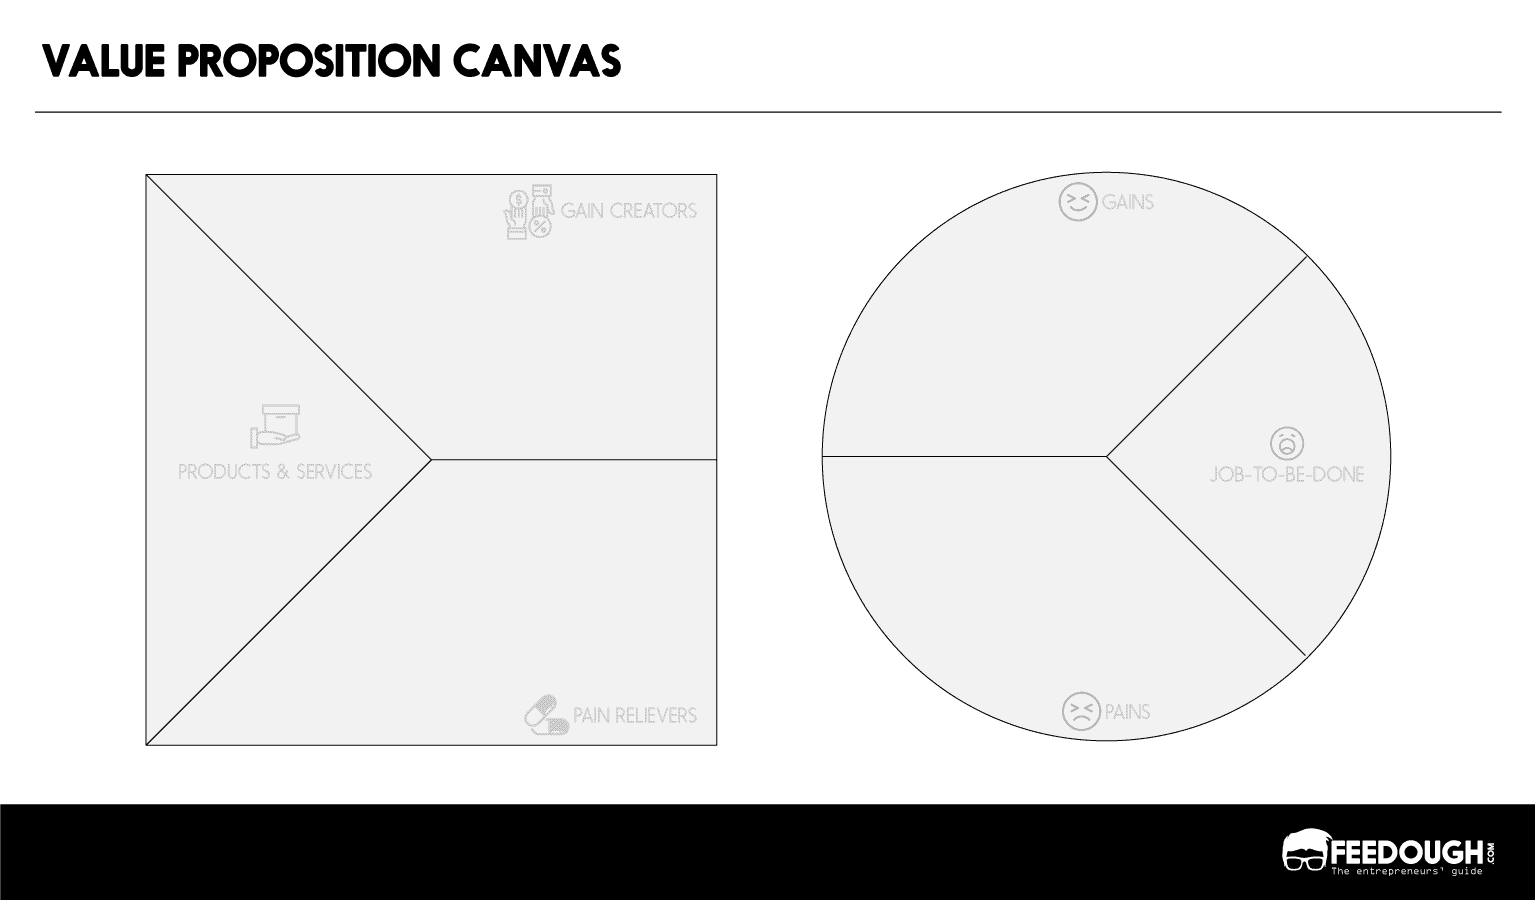 value proposition canvas template